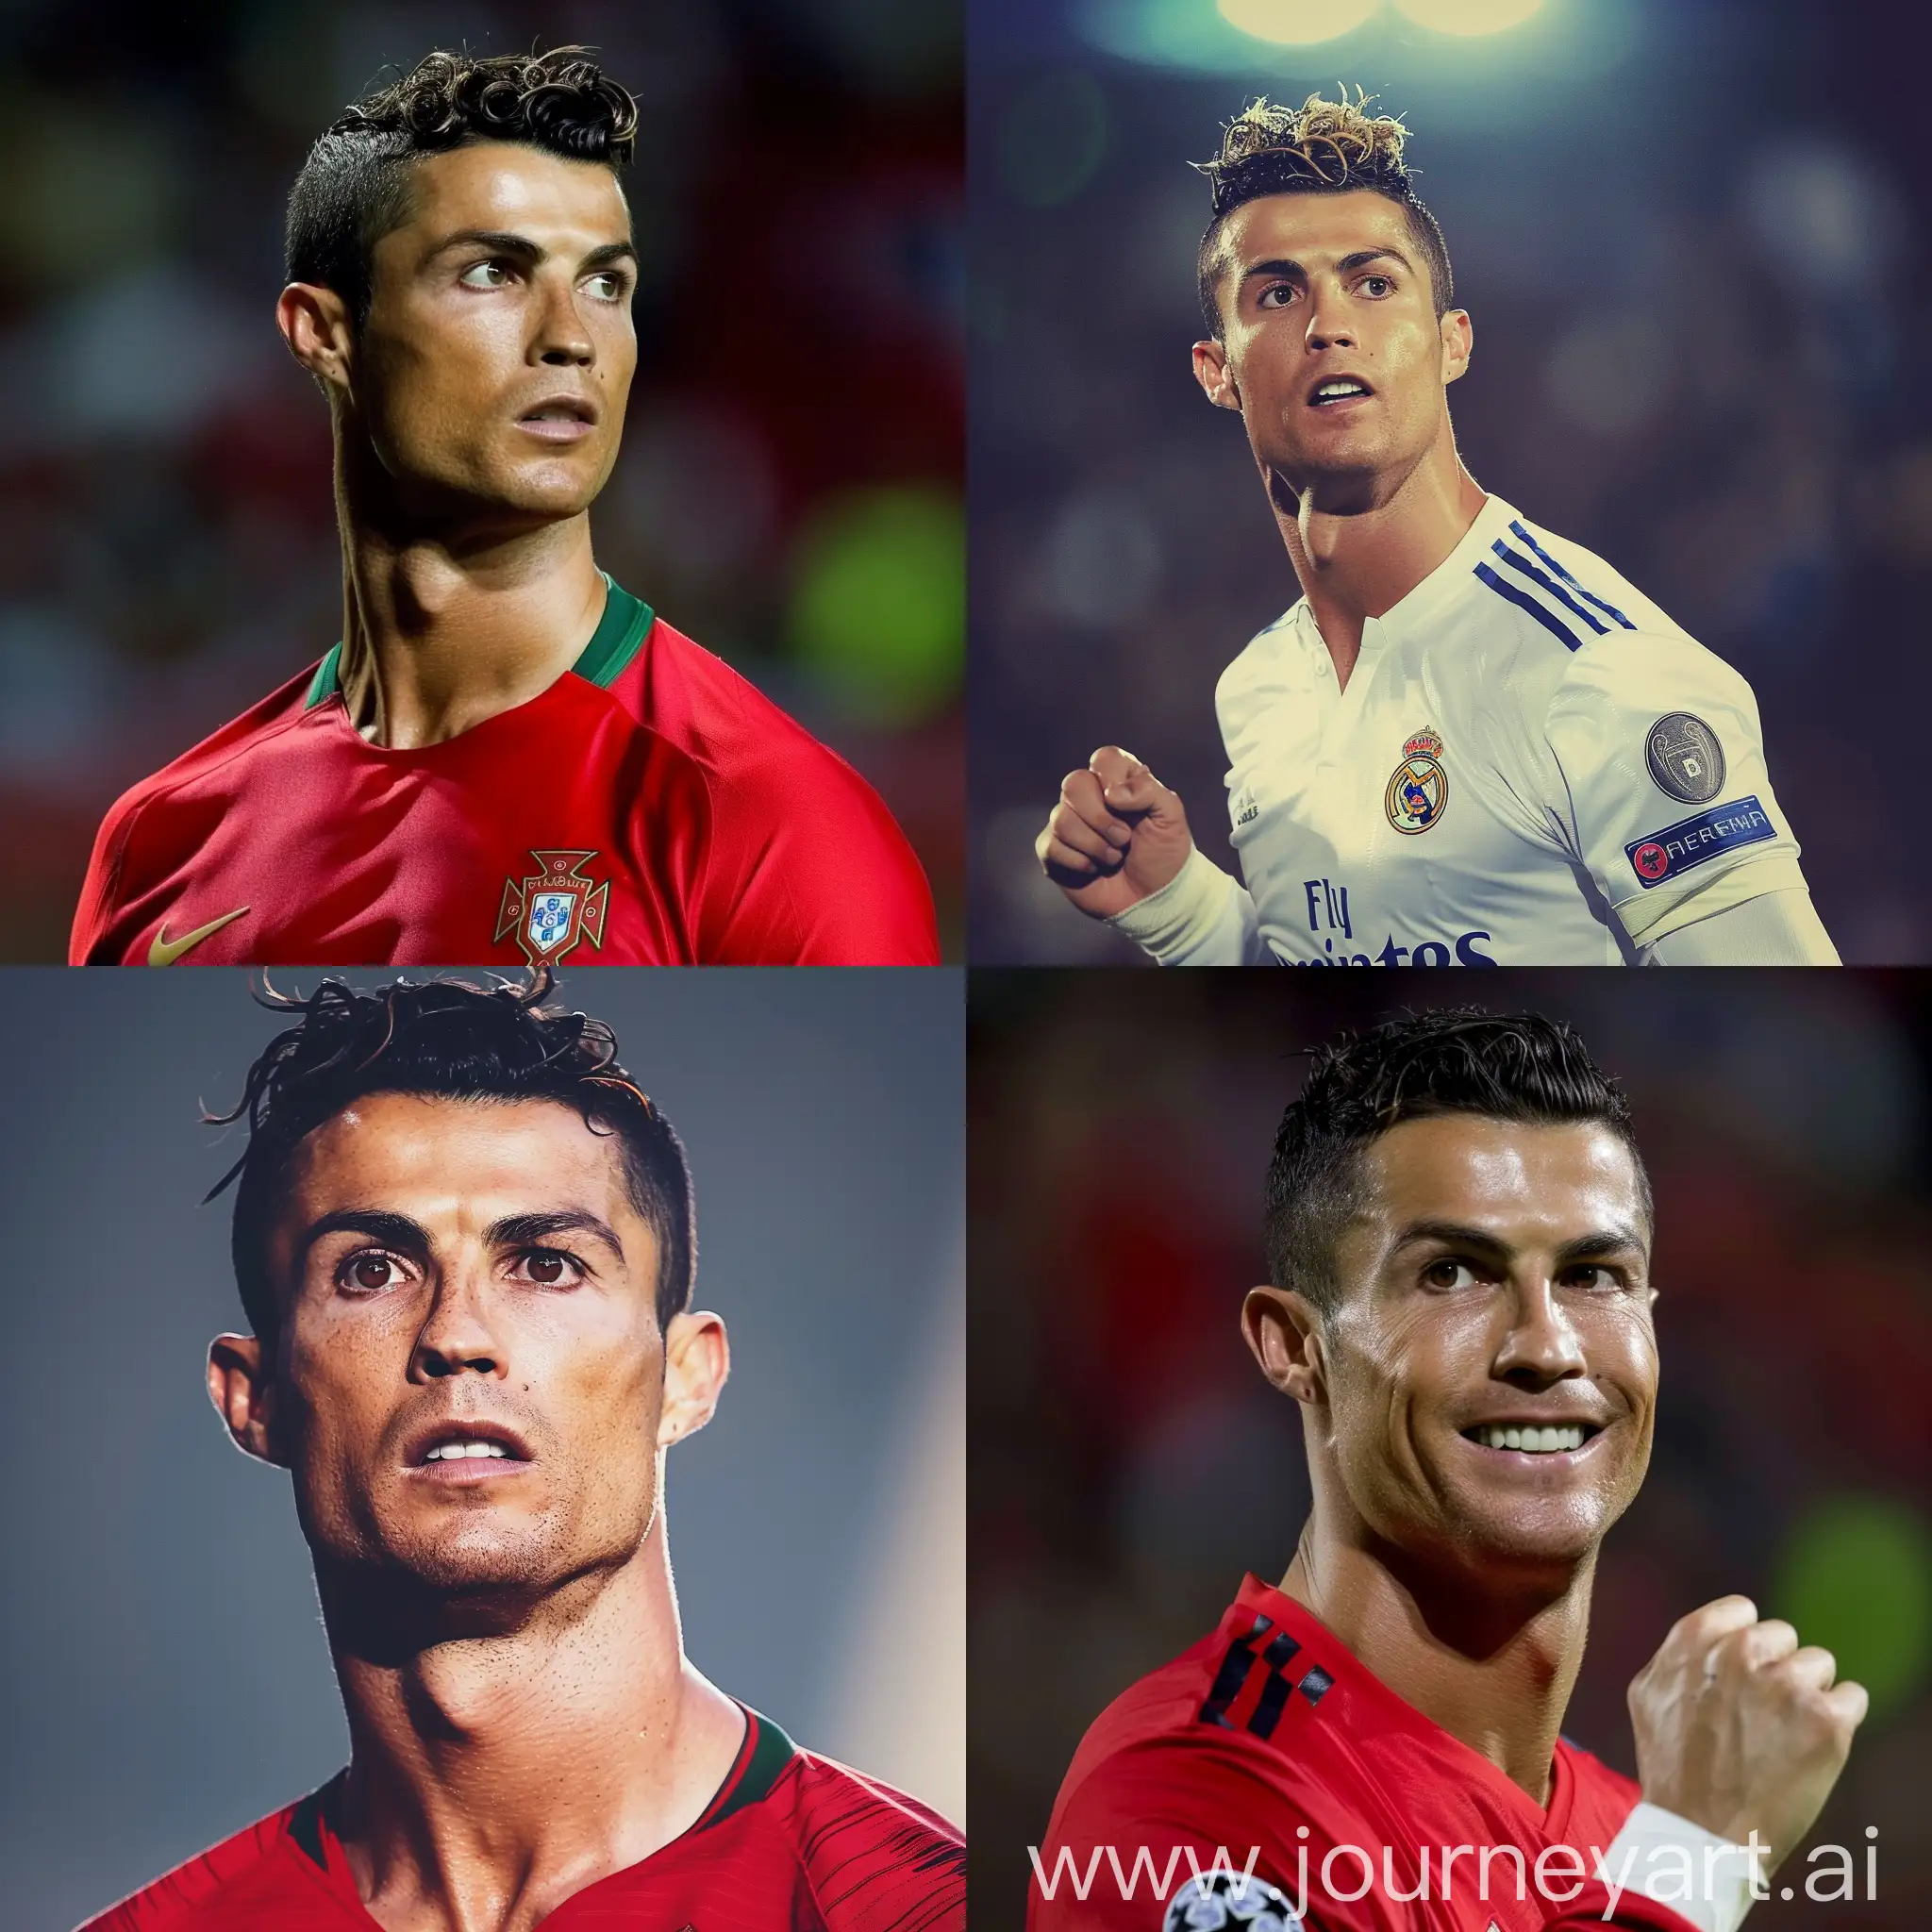 Cristiano-Ronaldo-in-Action-Soccer-Superstar-at-Stadium